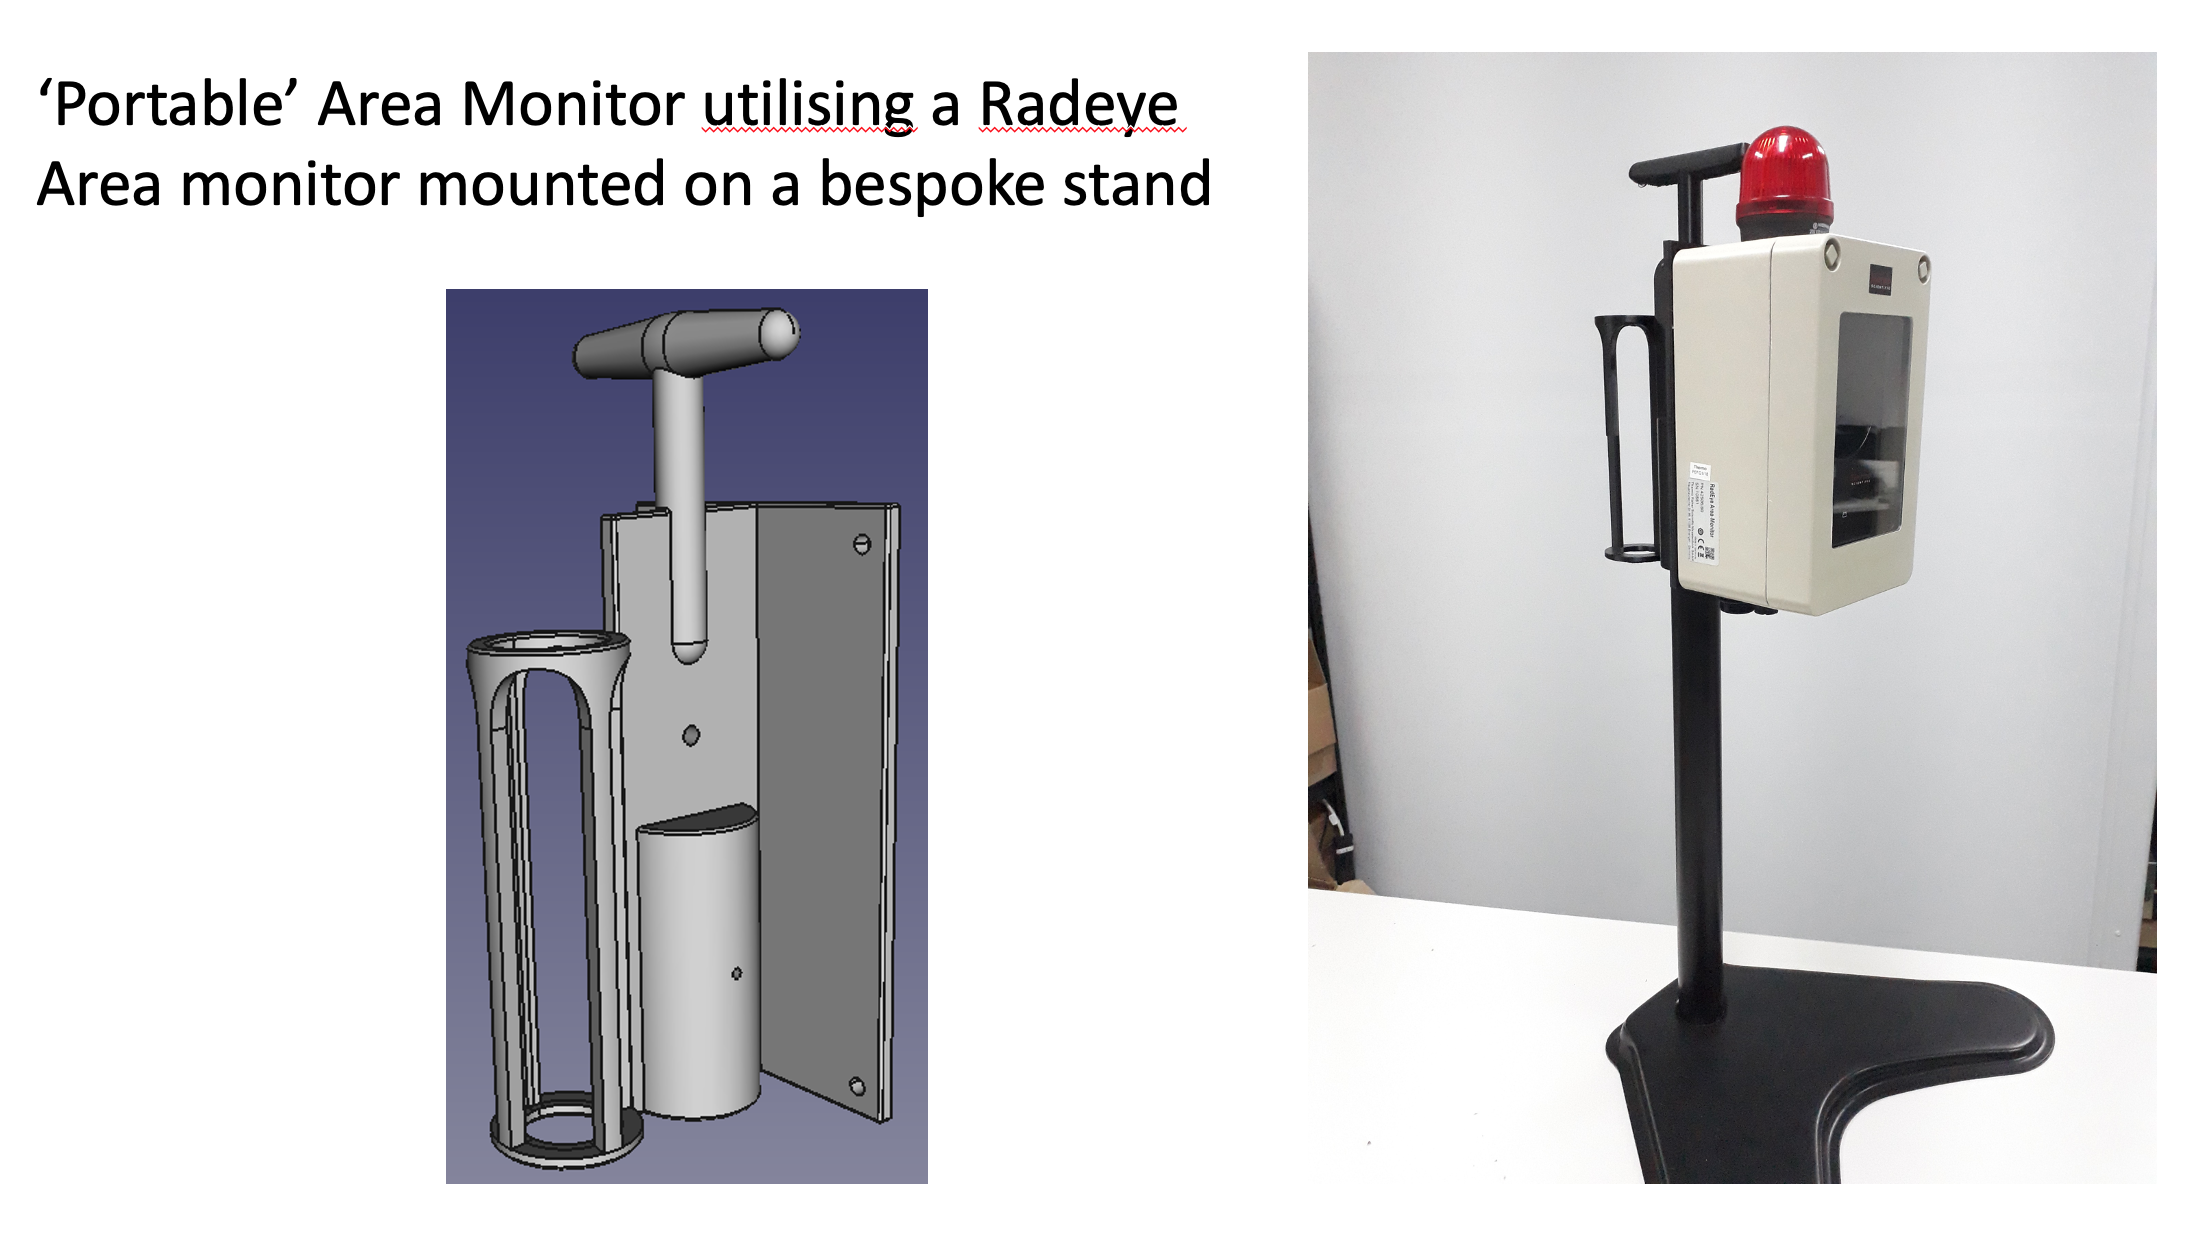 bespoke stand for RadEye area radiation monitor